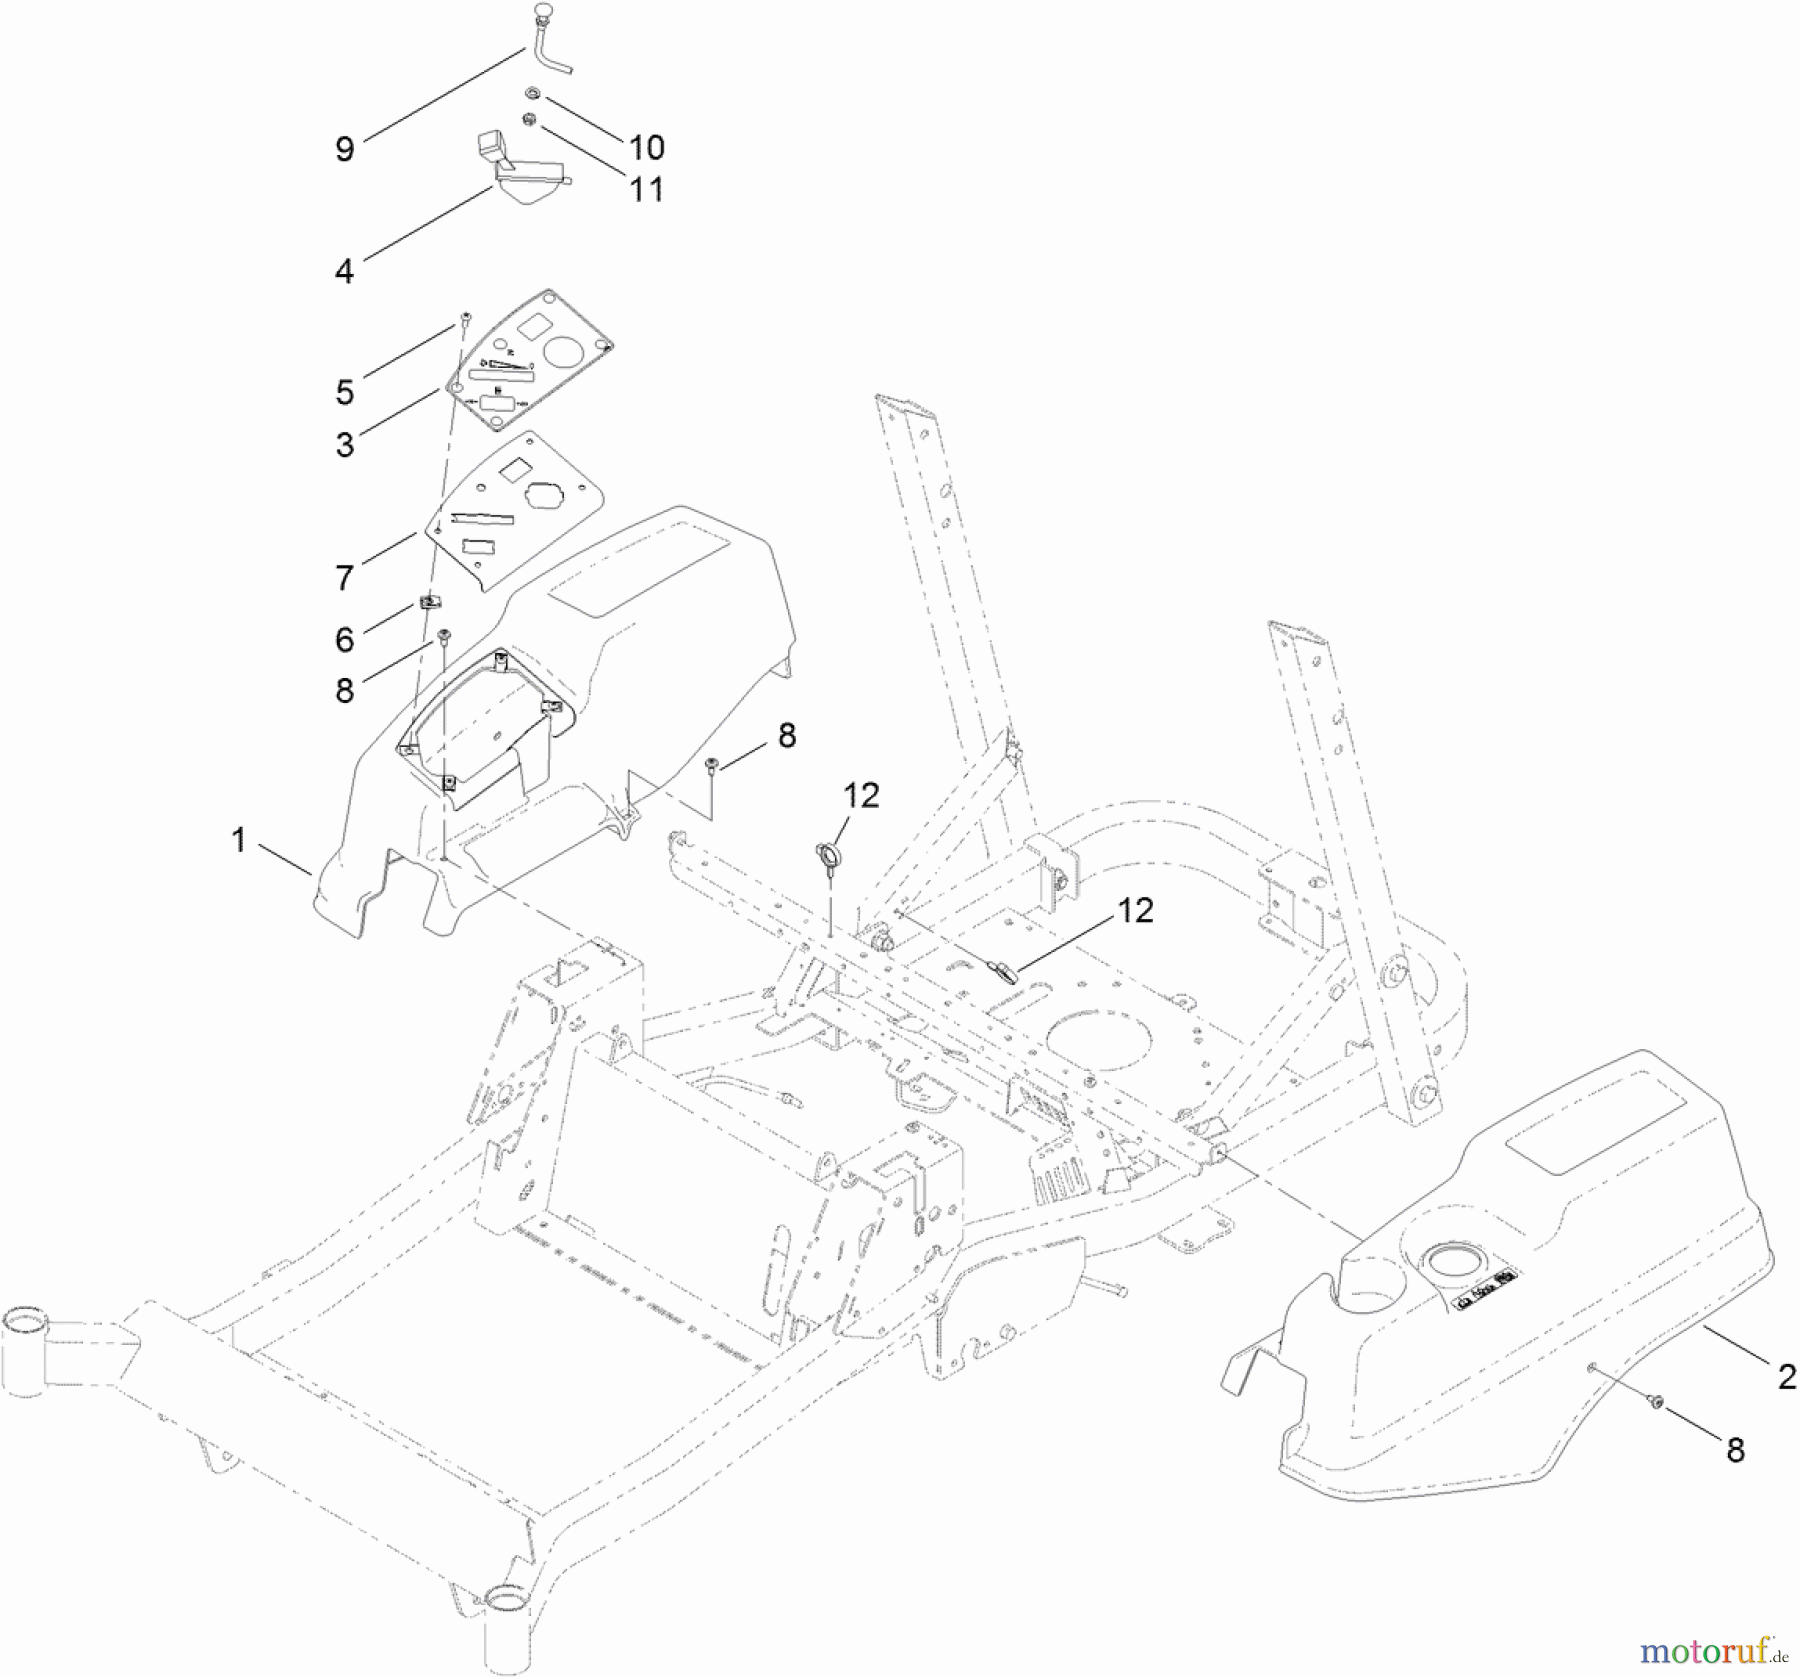  Toro Neu Mowers, Zero-Turn 74841 (ZX4820) - Toro TITAN ZX4820 Zero-Turn-Radius Riding Mower, 2011 (311000001-311999999) CONTROL PANEL AND BODY STYLING POD ASSEMBLY